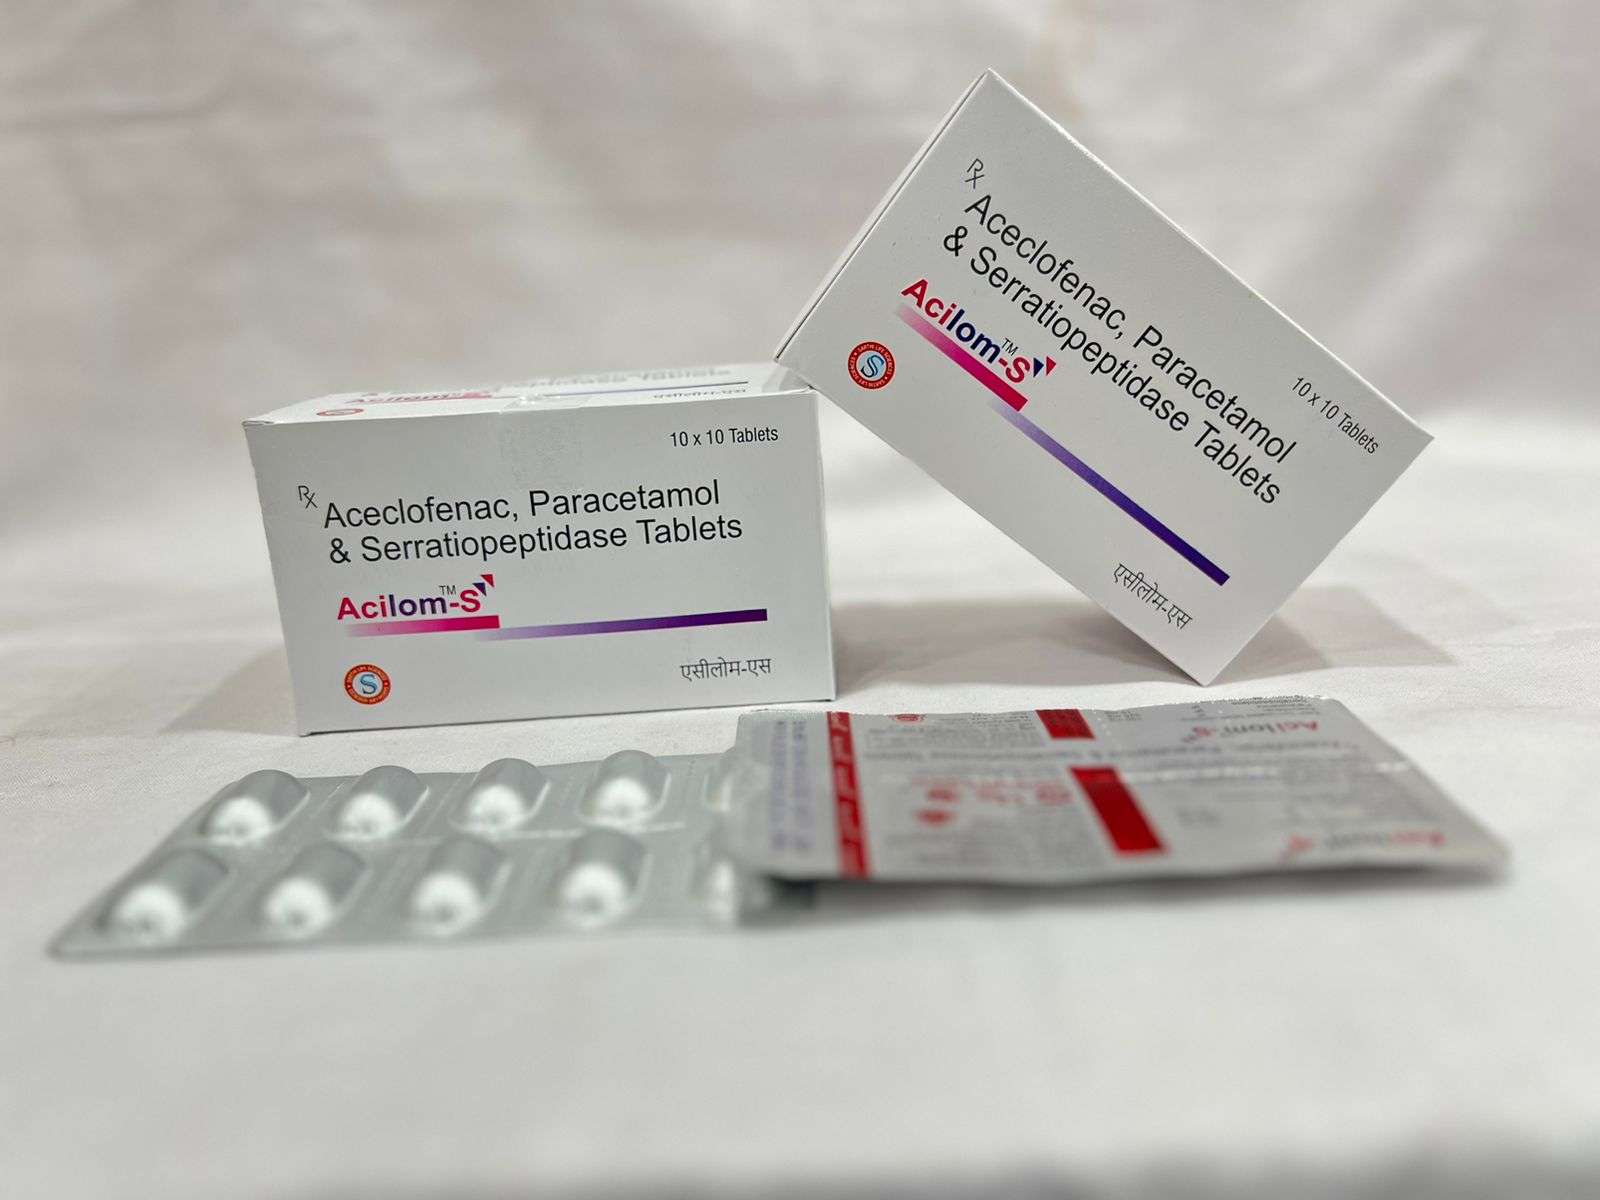 aceclofenac 100 mg + paracetamol
325mg + serratiopeptidase 15mg.